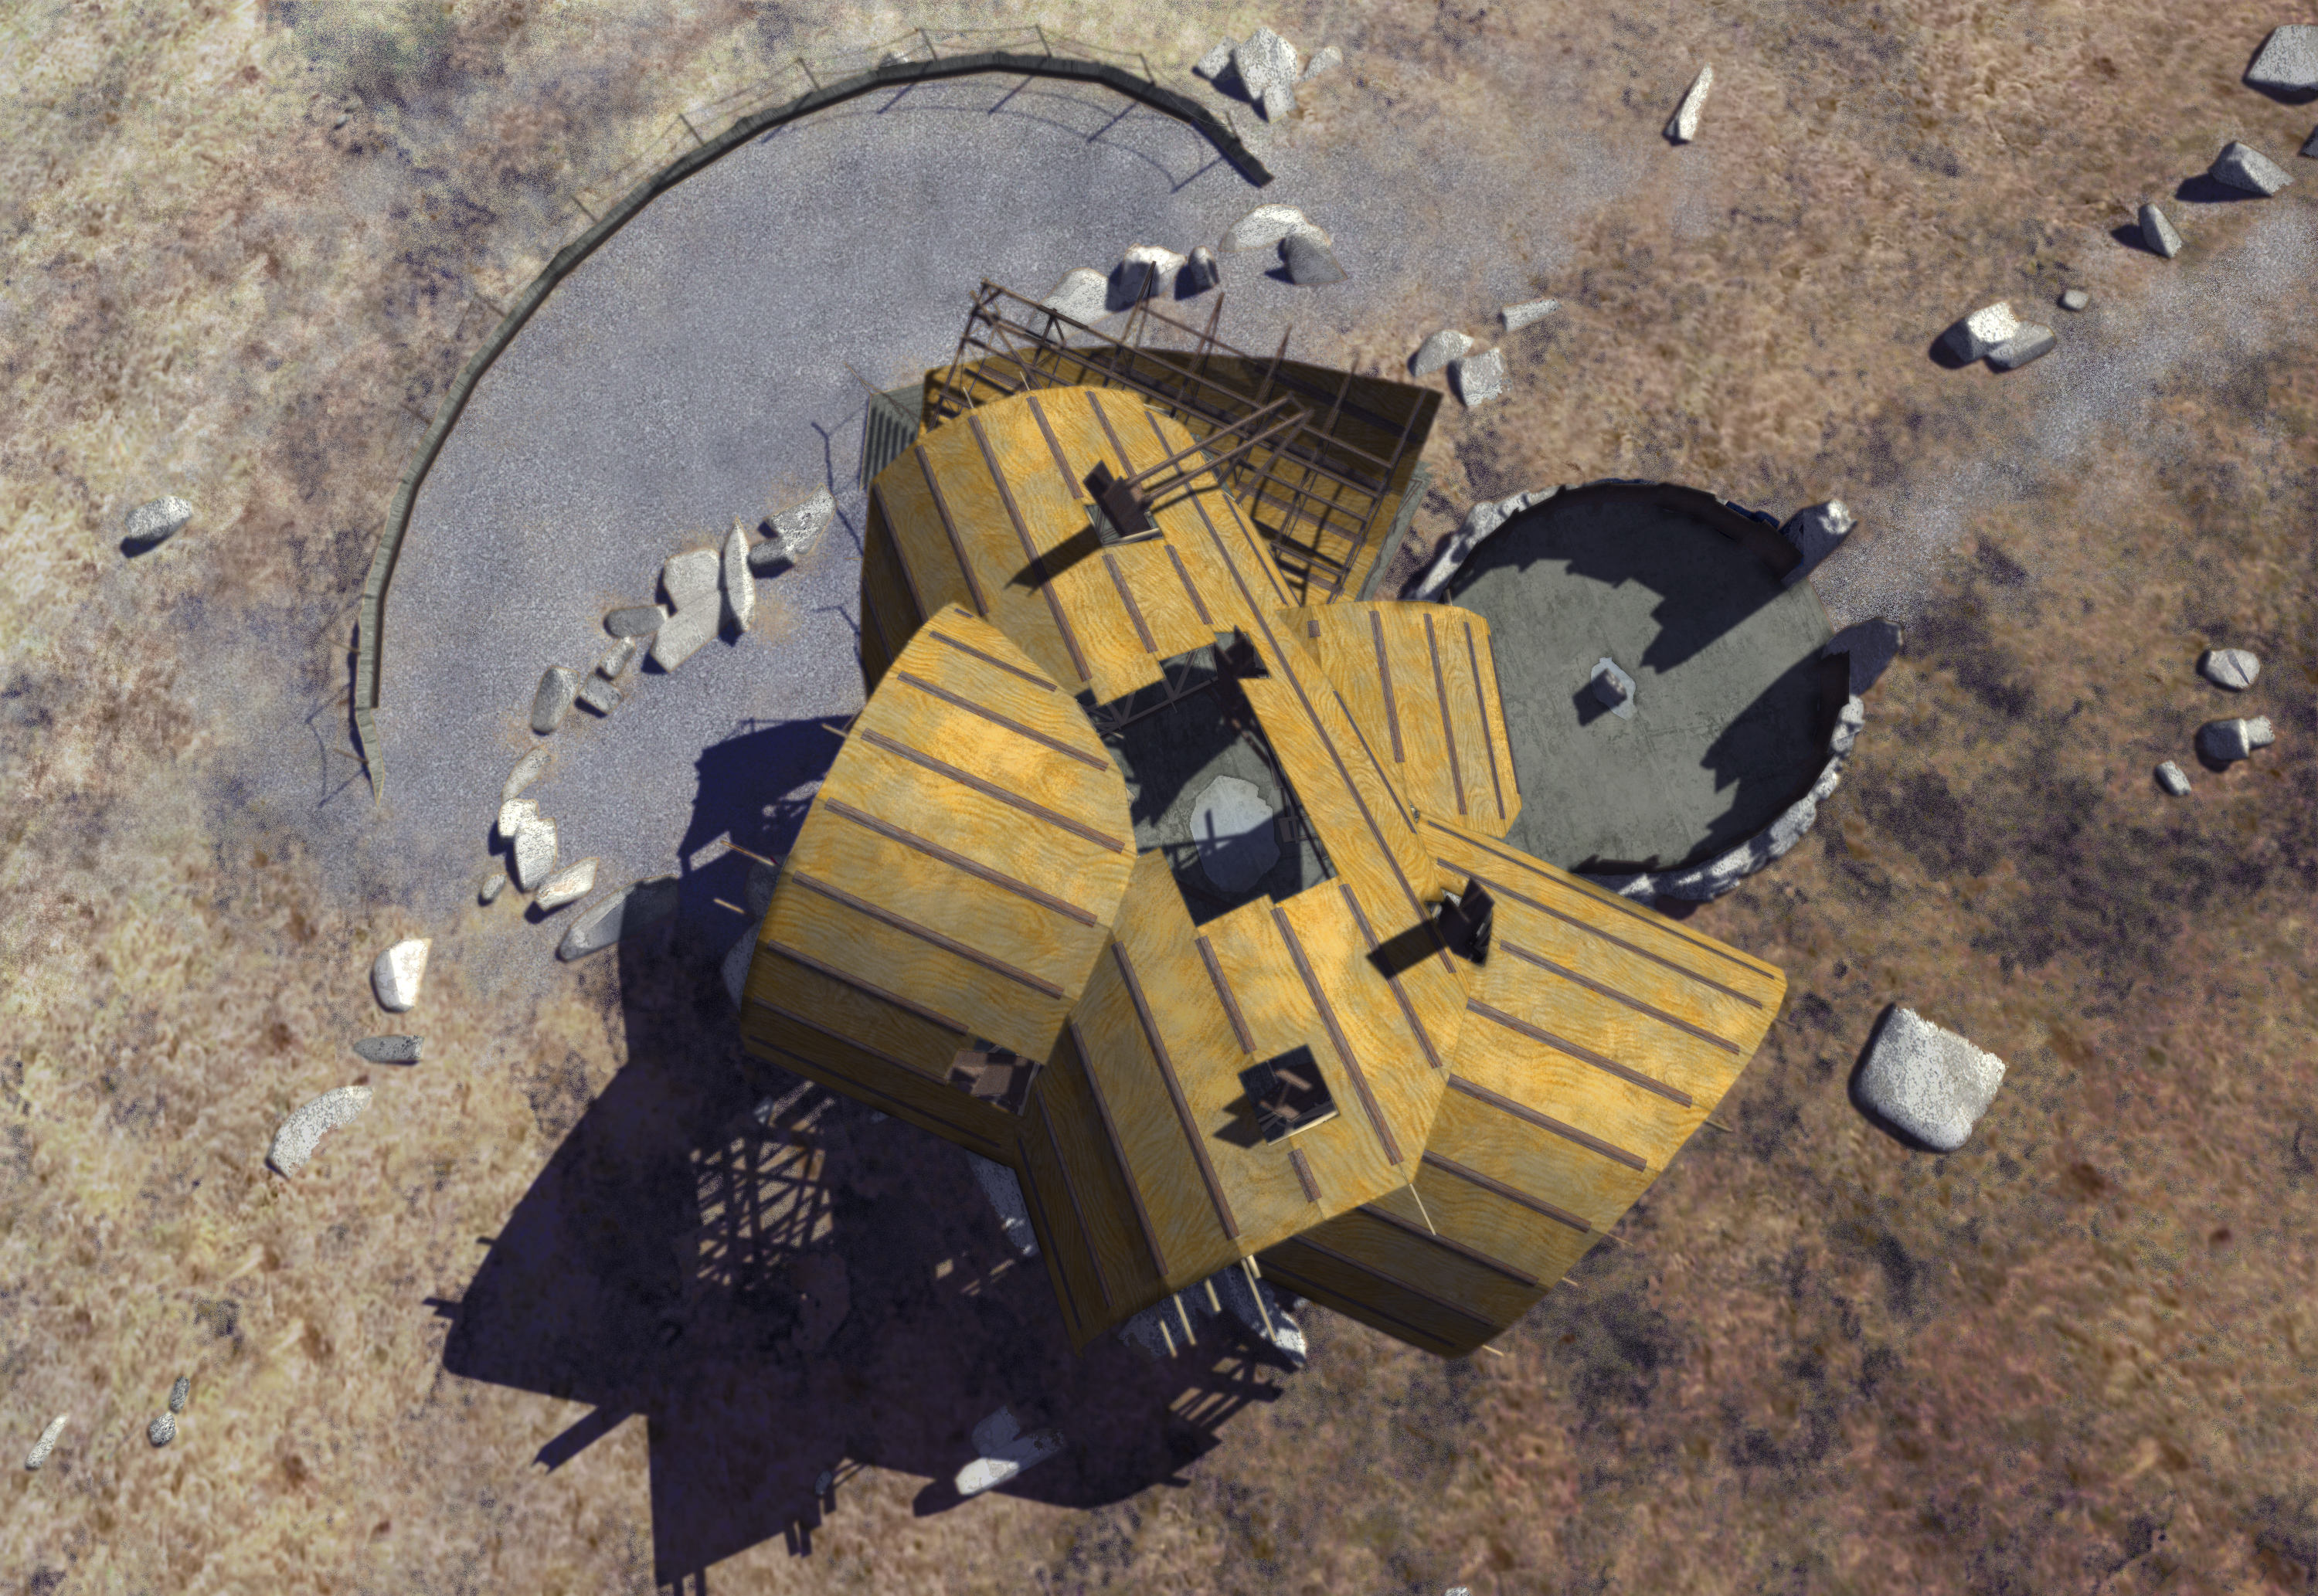 Pavilion for Oblivion (2007) drones-eye view